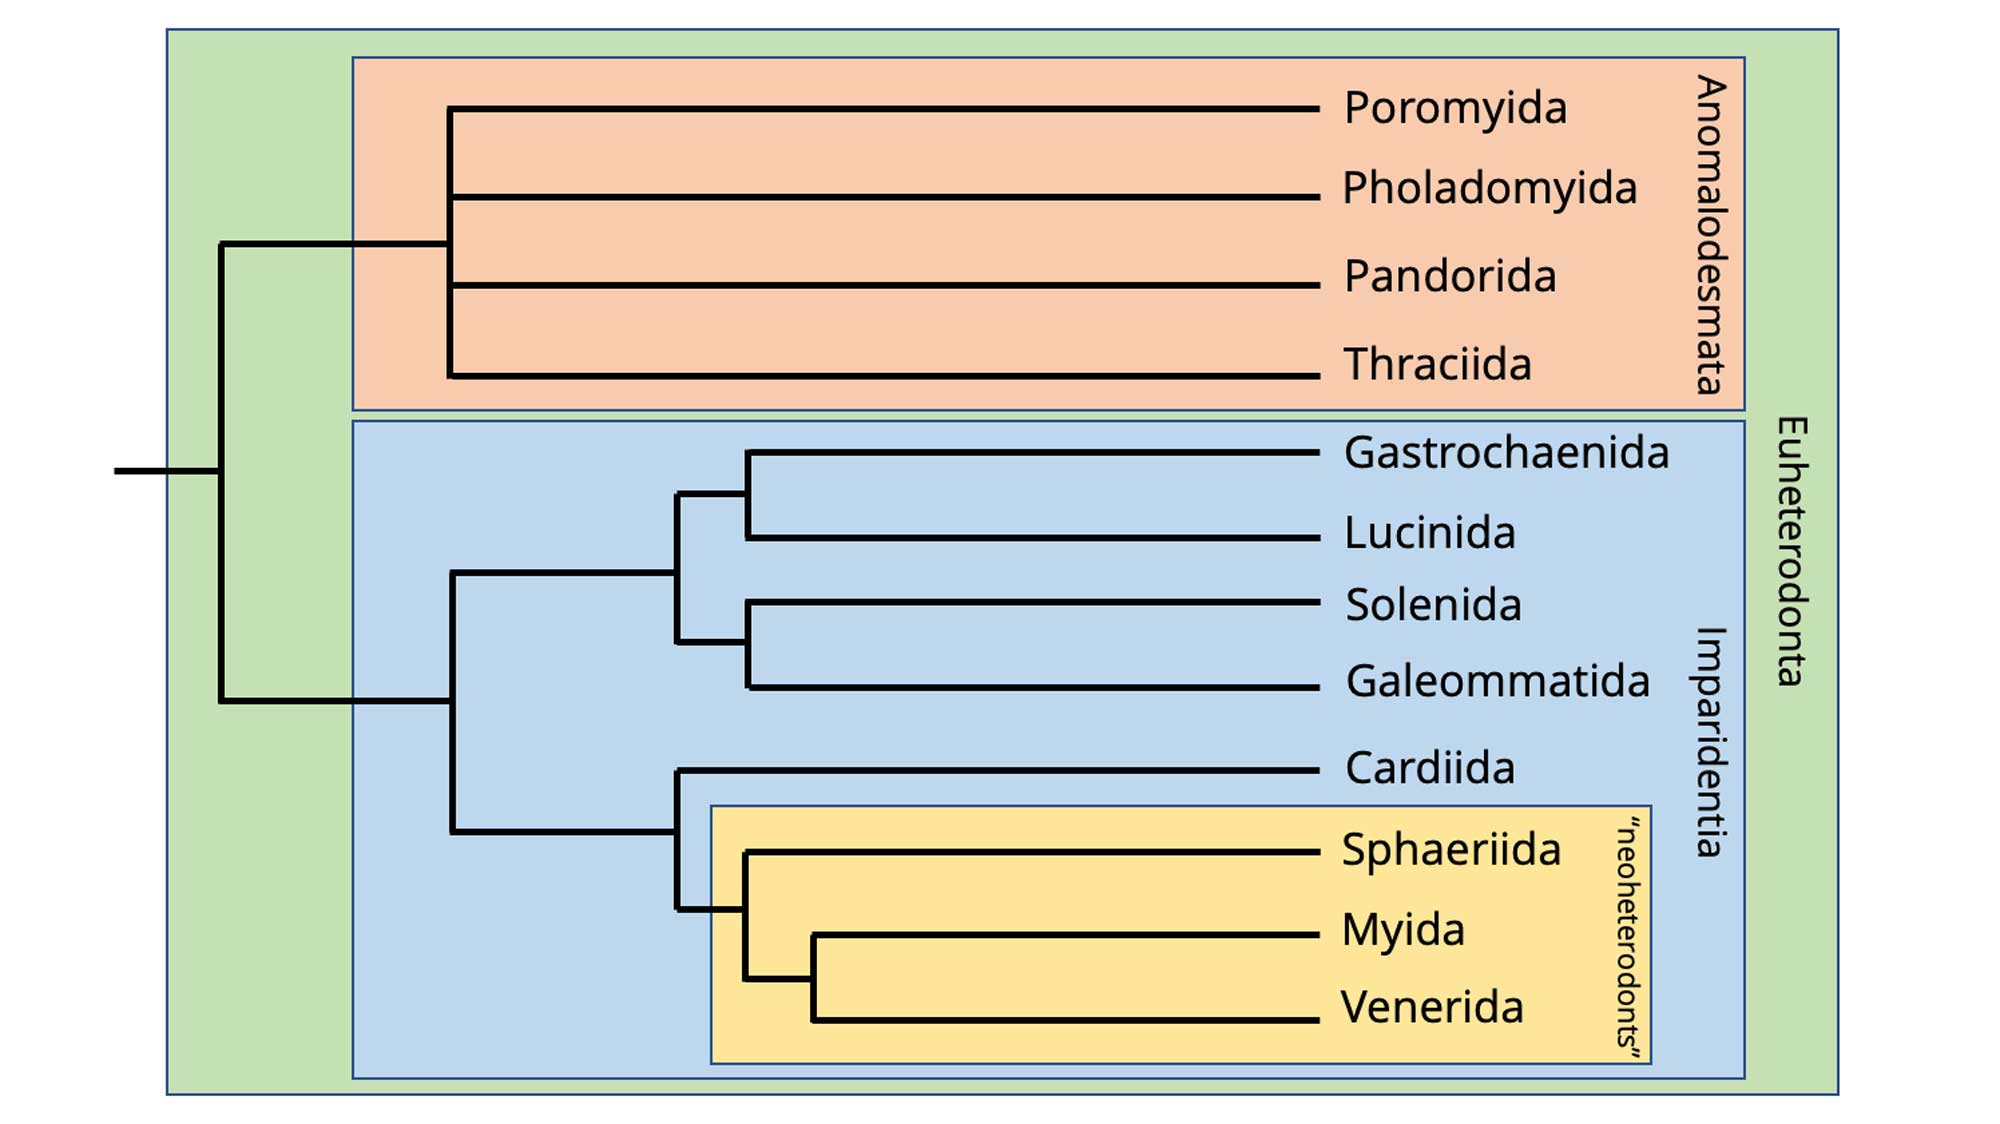 Image showing a phylogeny of euheterodont bivalves.